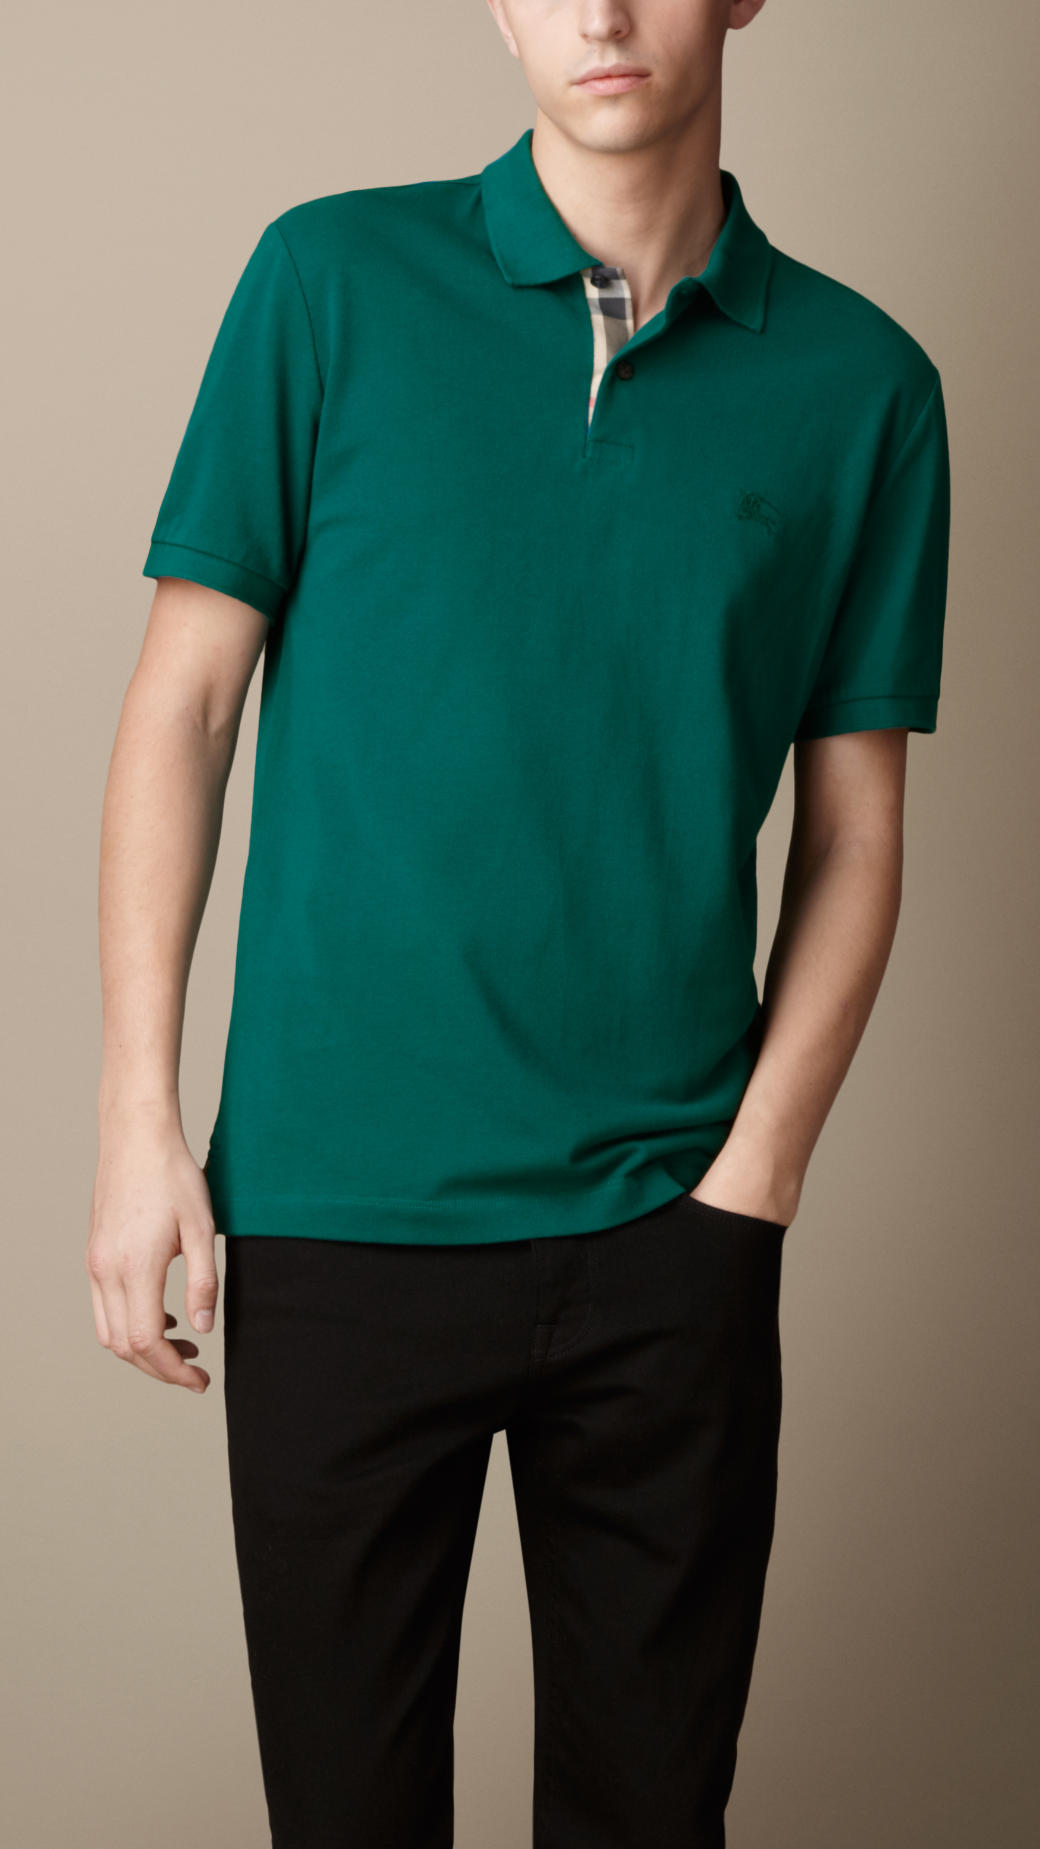 burberry polo shirt mens green